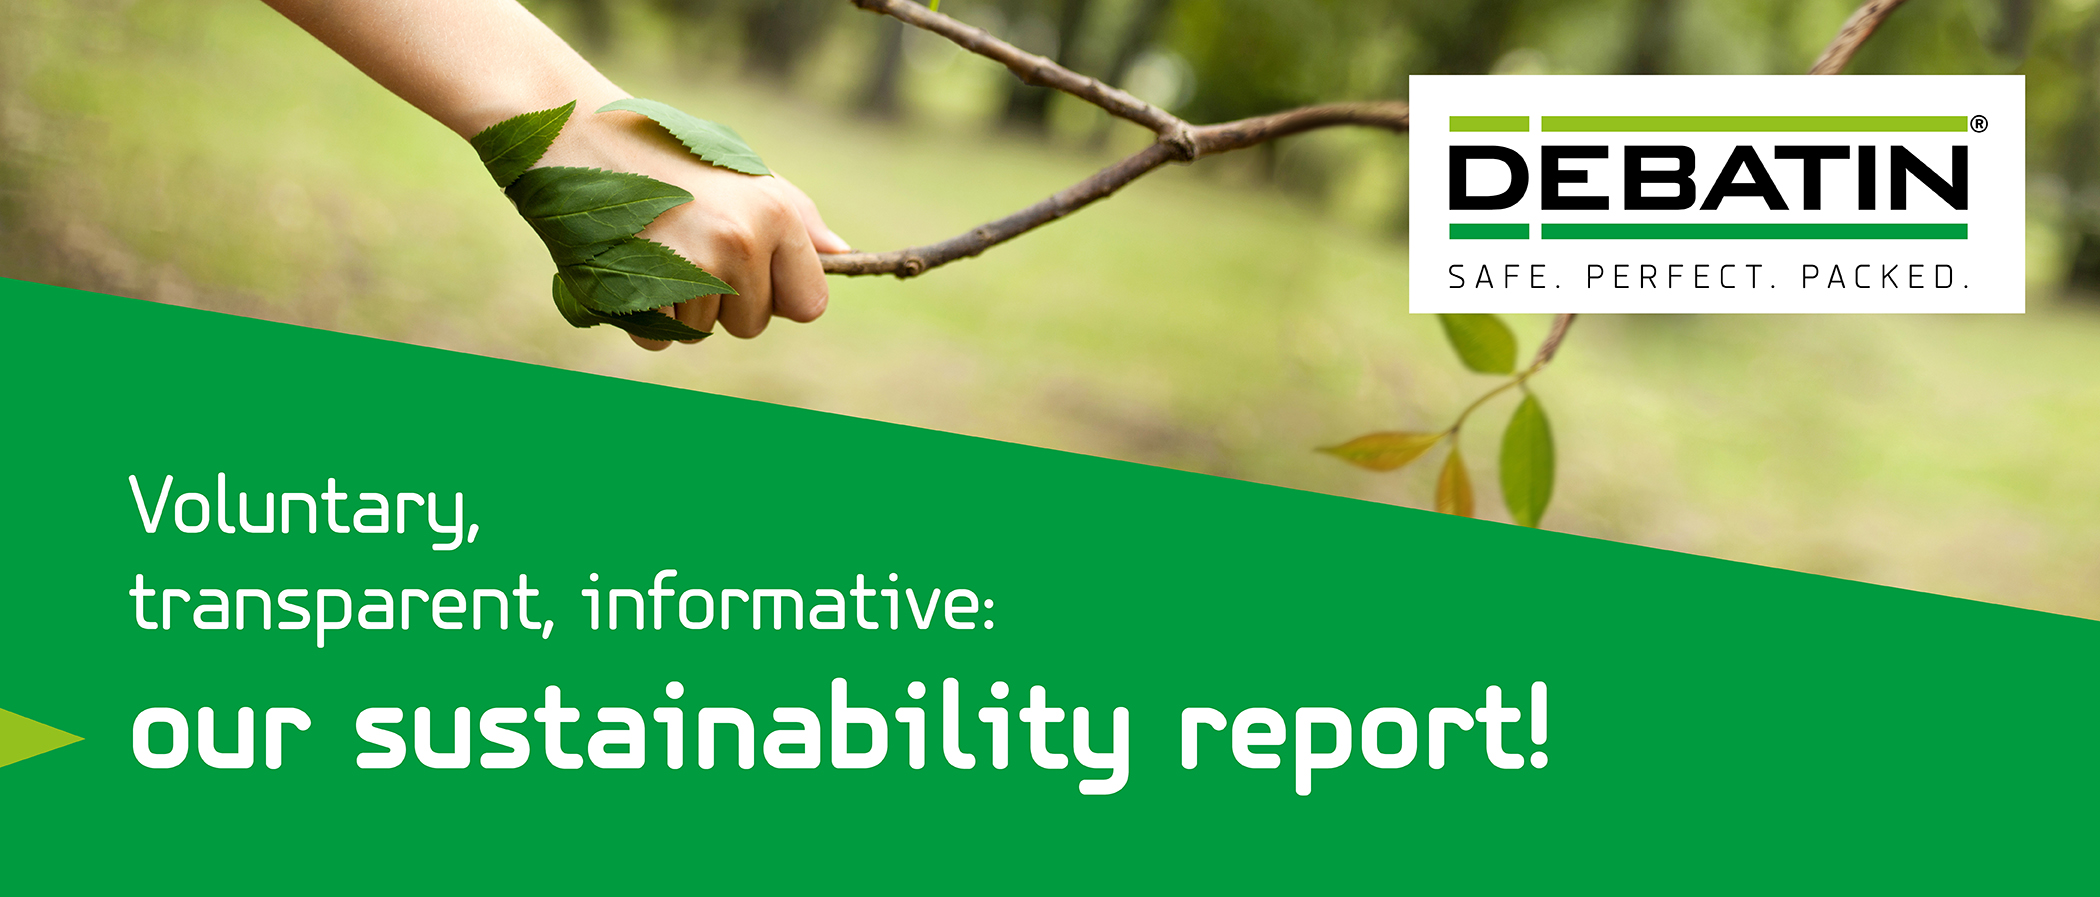 Sustainability report blog